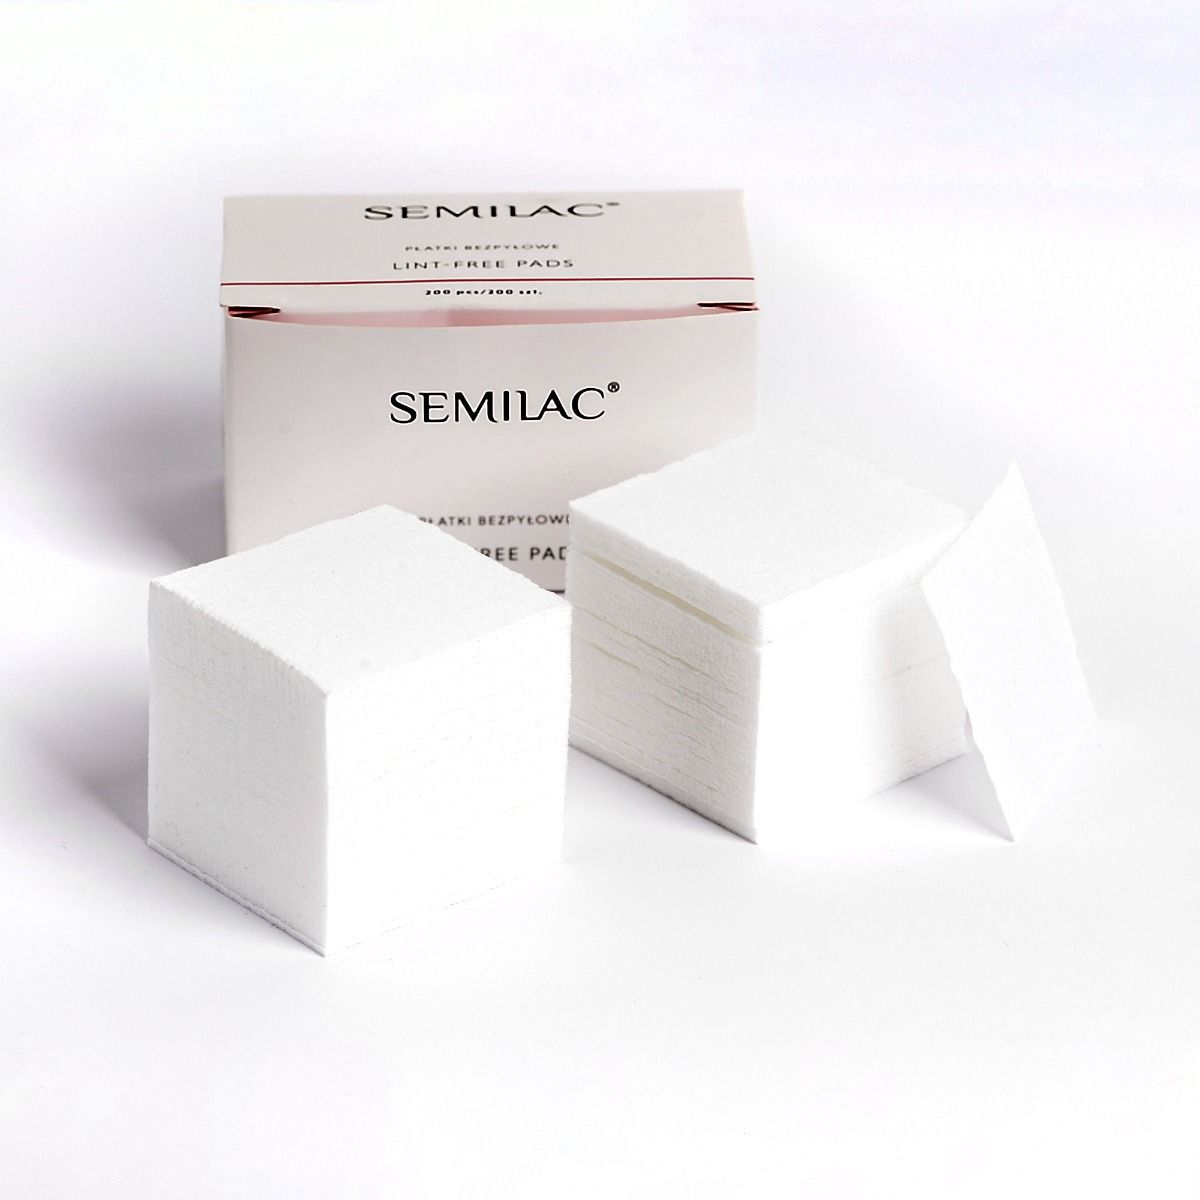 Semilac Lint-Free Pads 200 pieces - Semilac Shop